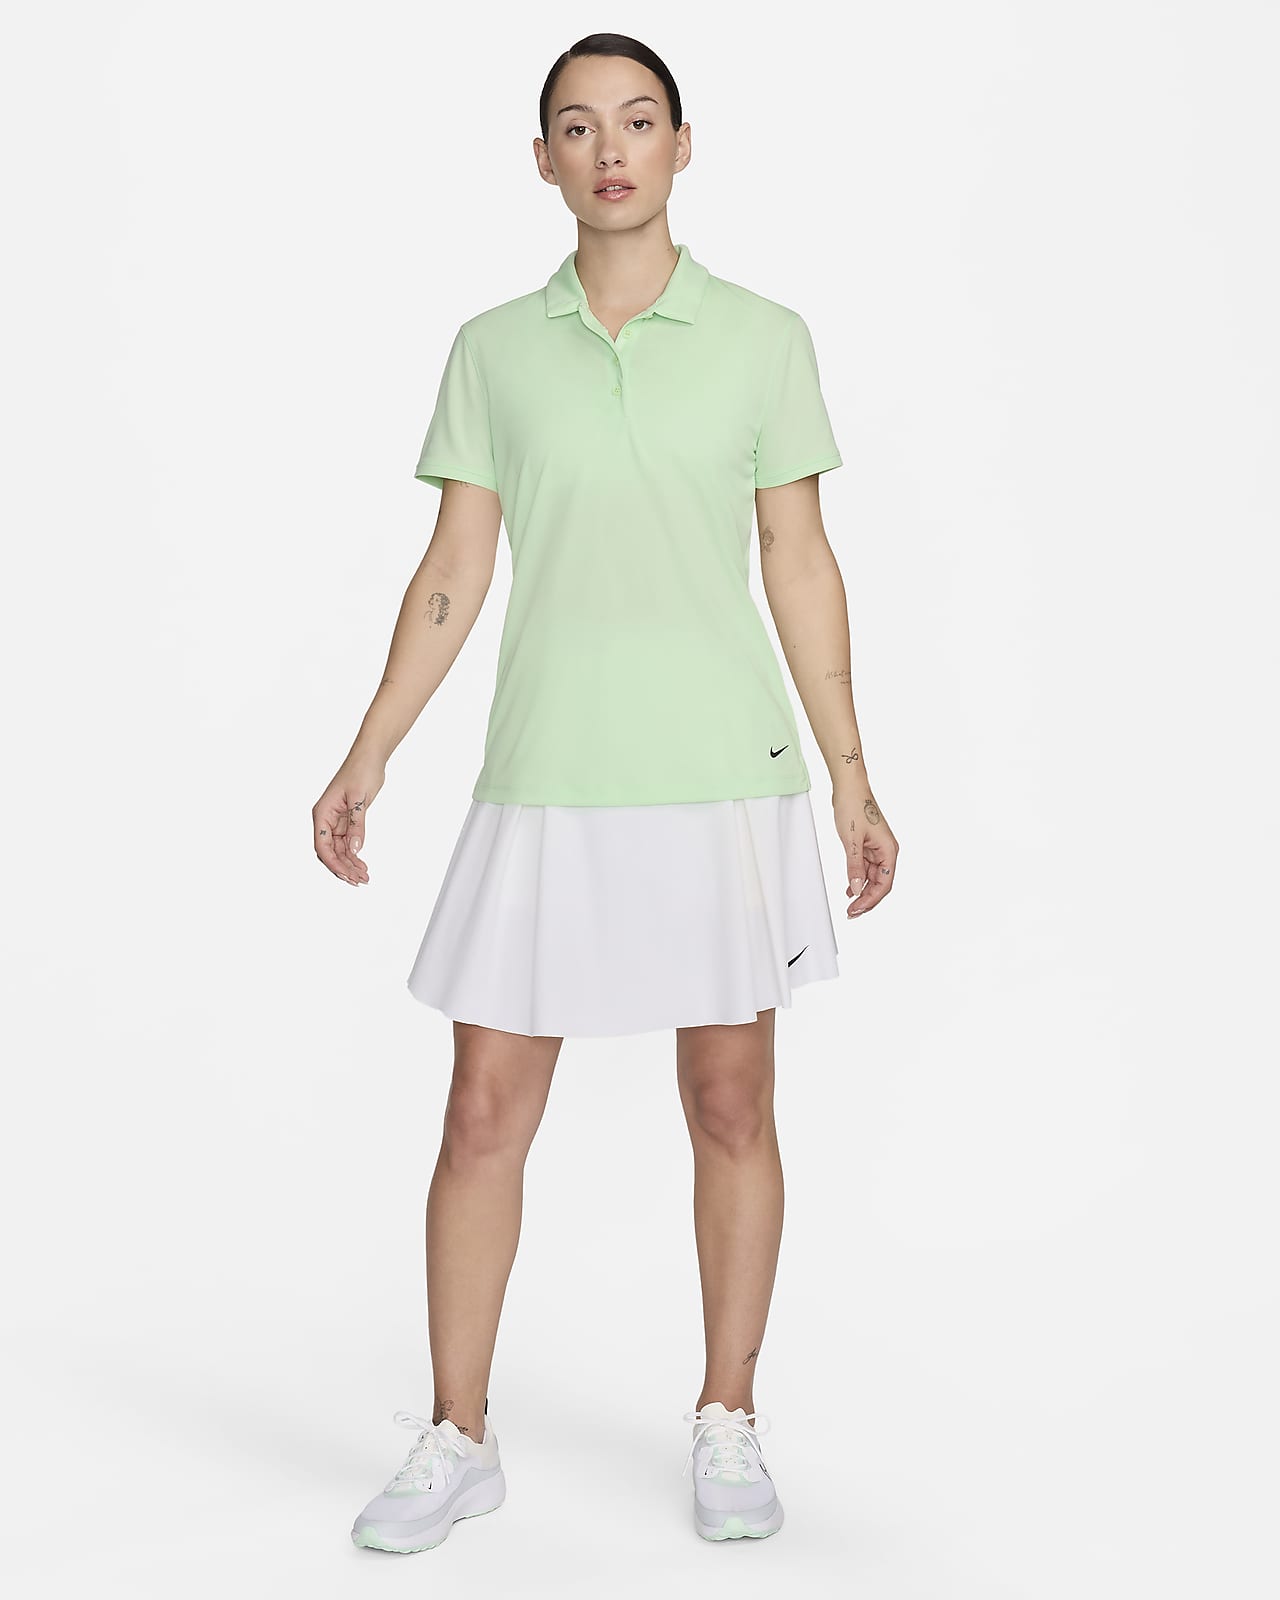 Nike Dri-FIT Victory Women's Sleeveless Golf Polo